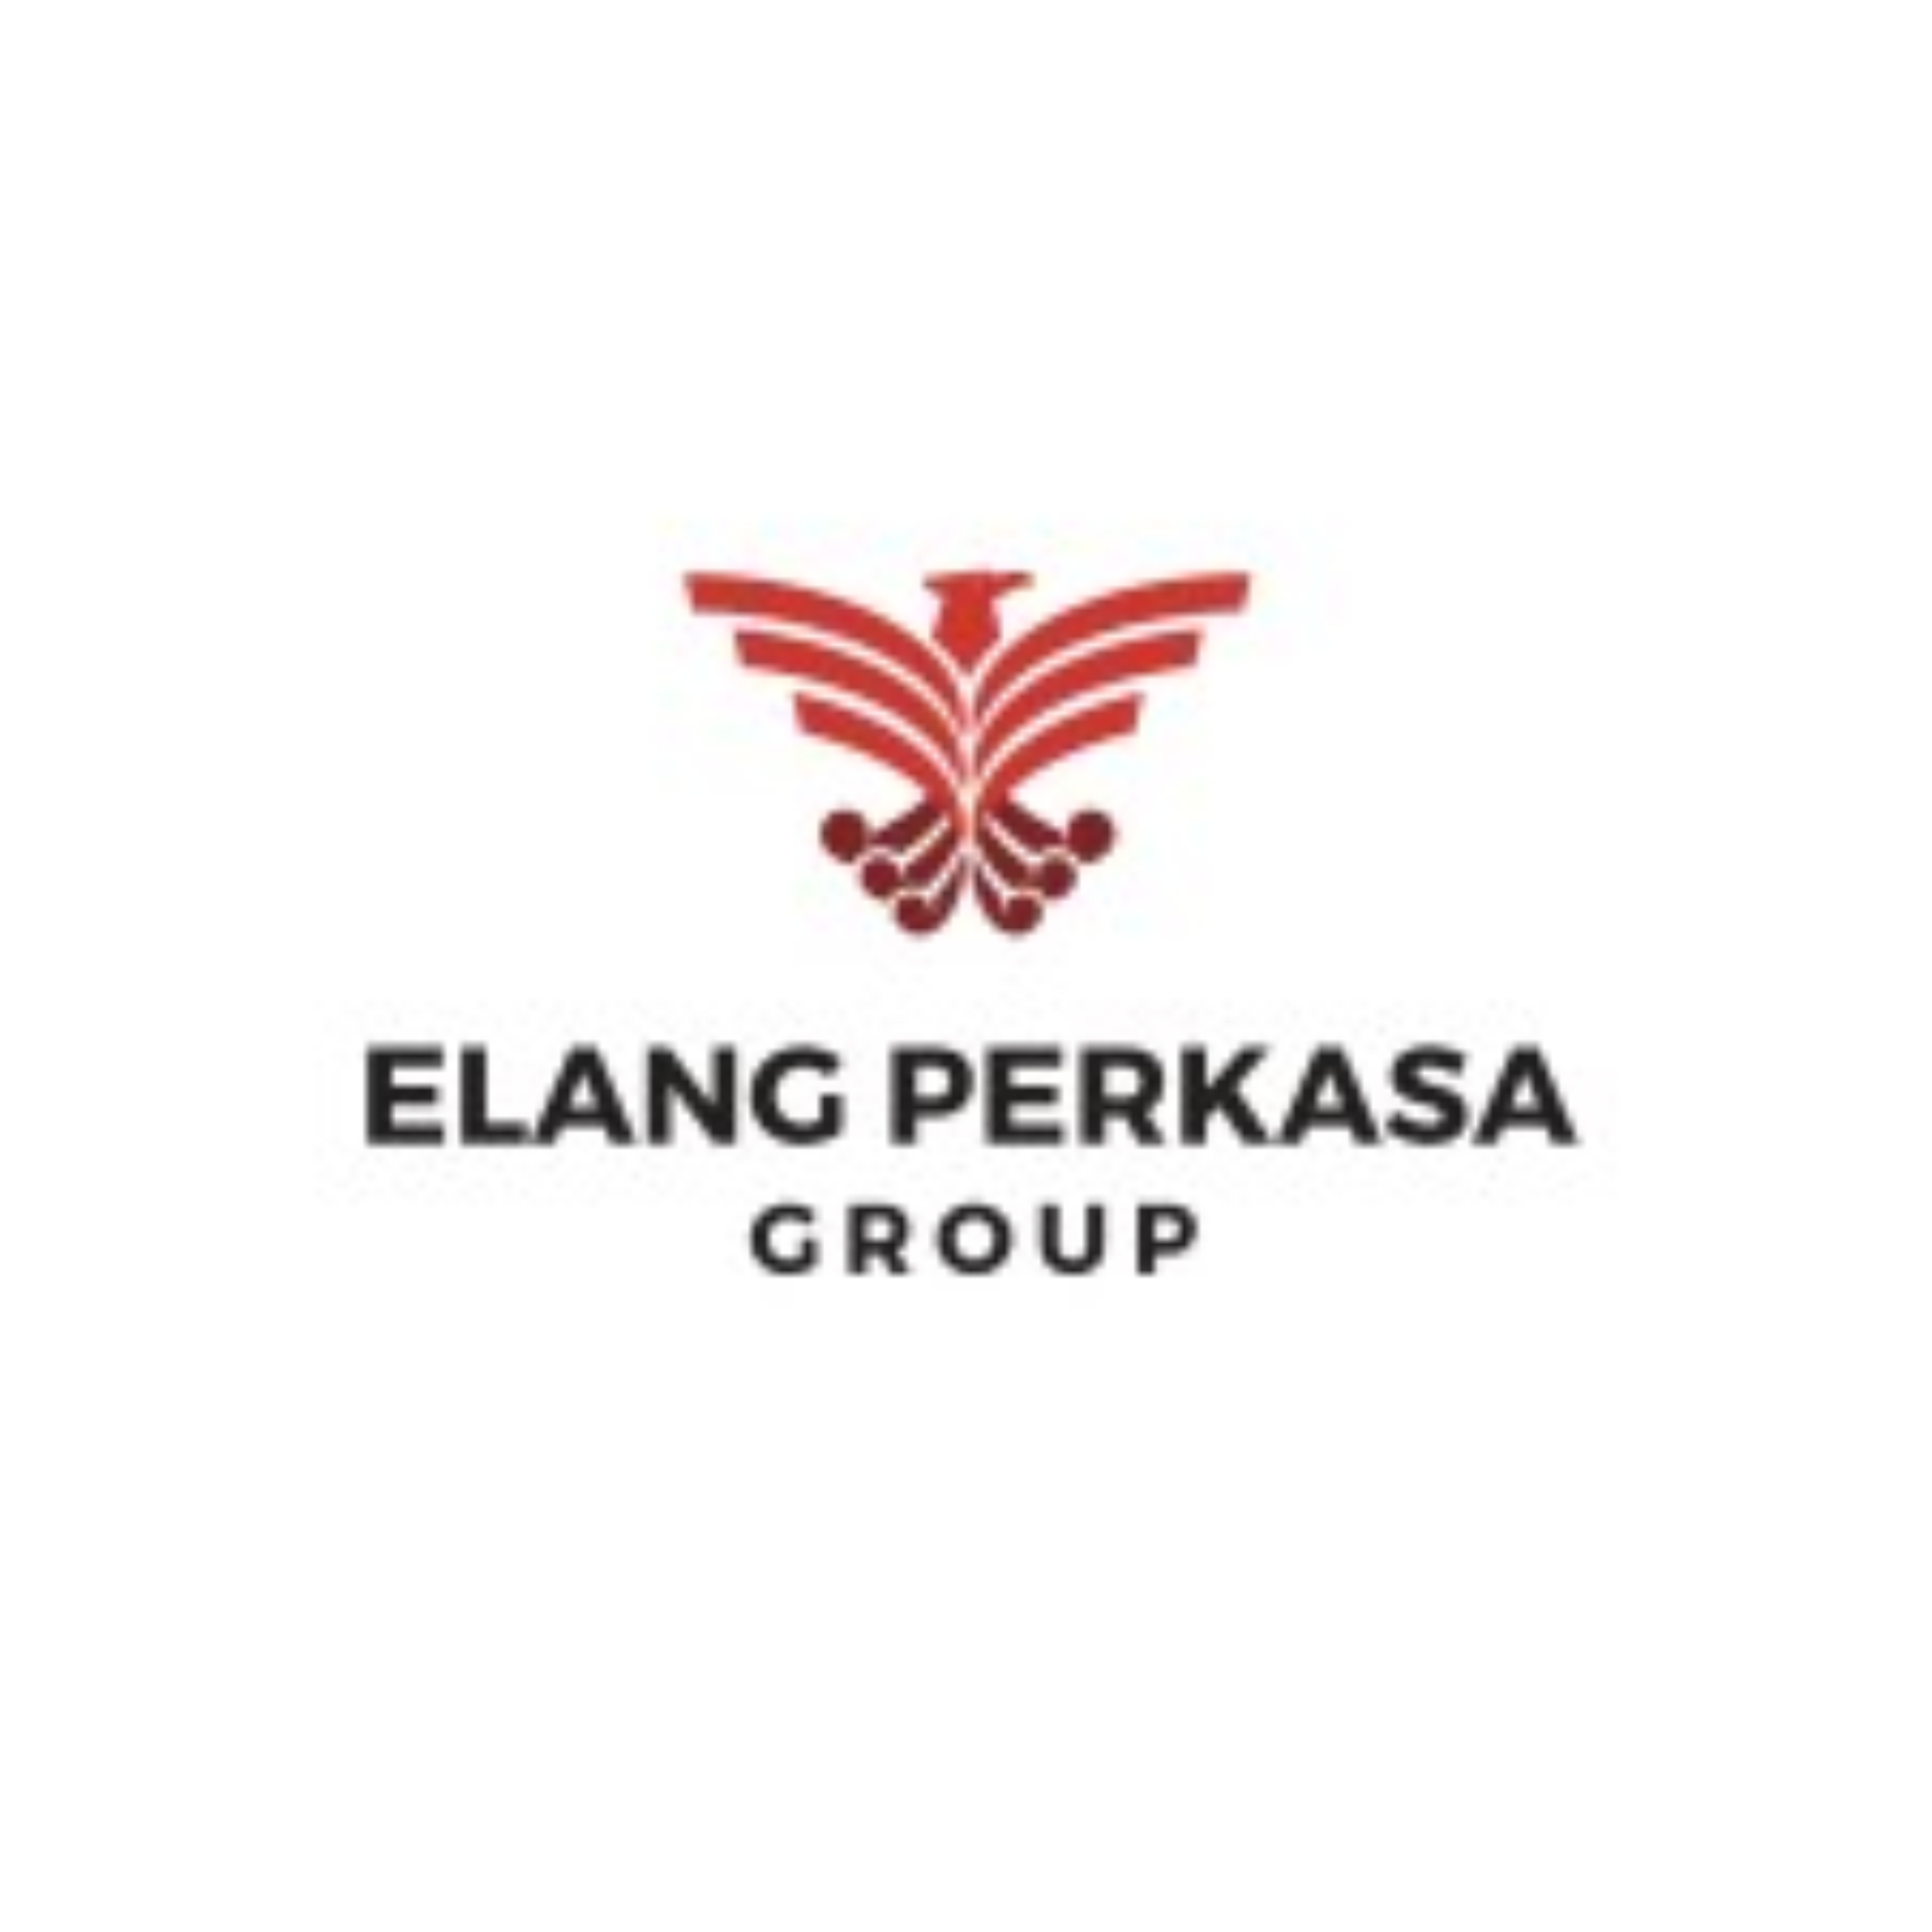 Elang Perkasa Group